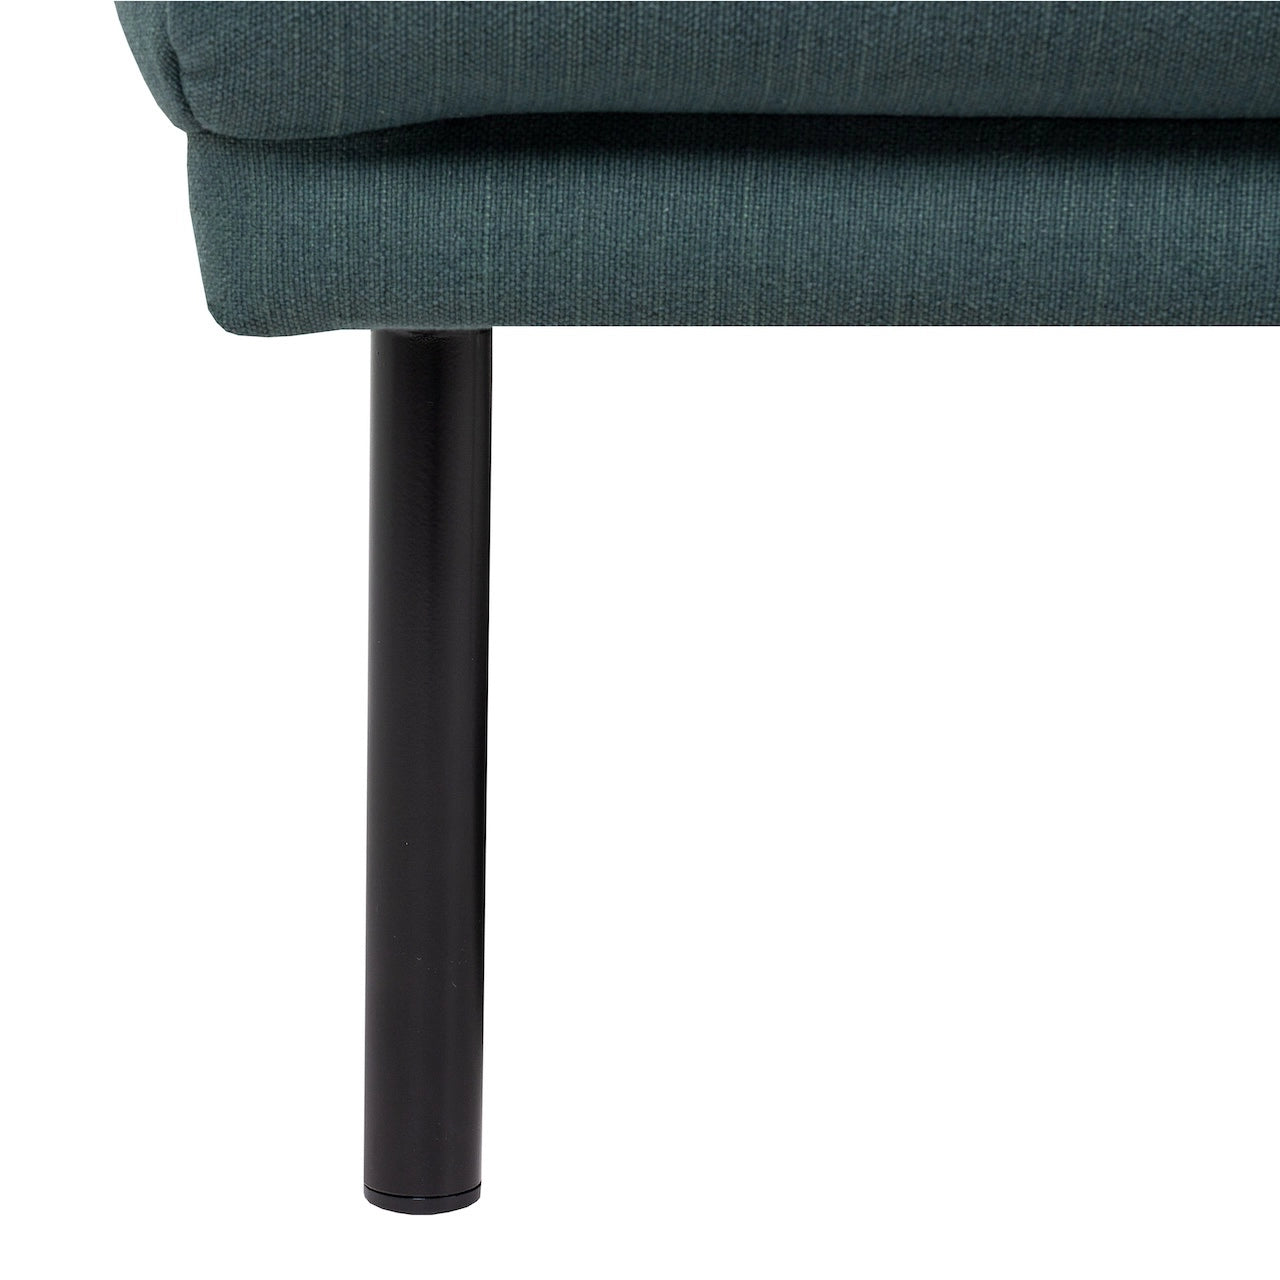 Furniture To Go Larvik 3 Seater Sofa - Dark Green, Black Legs